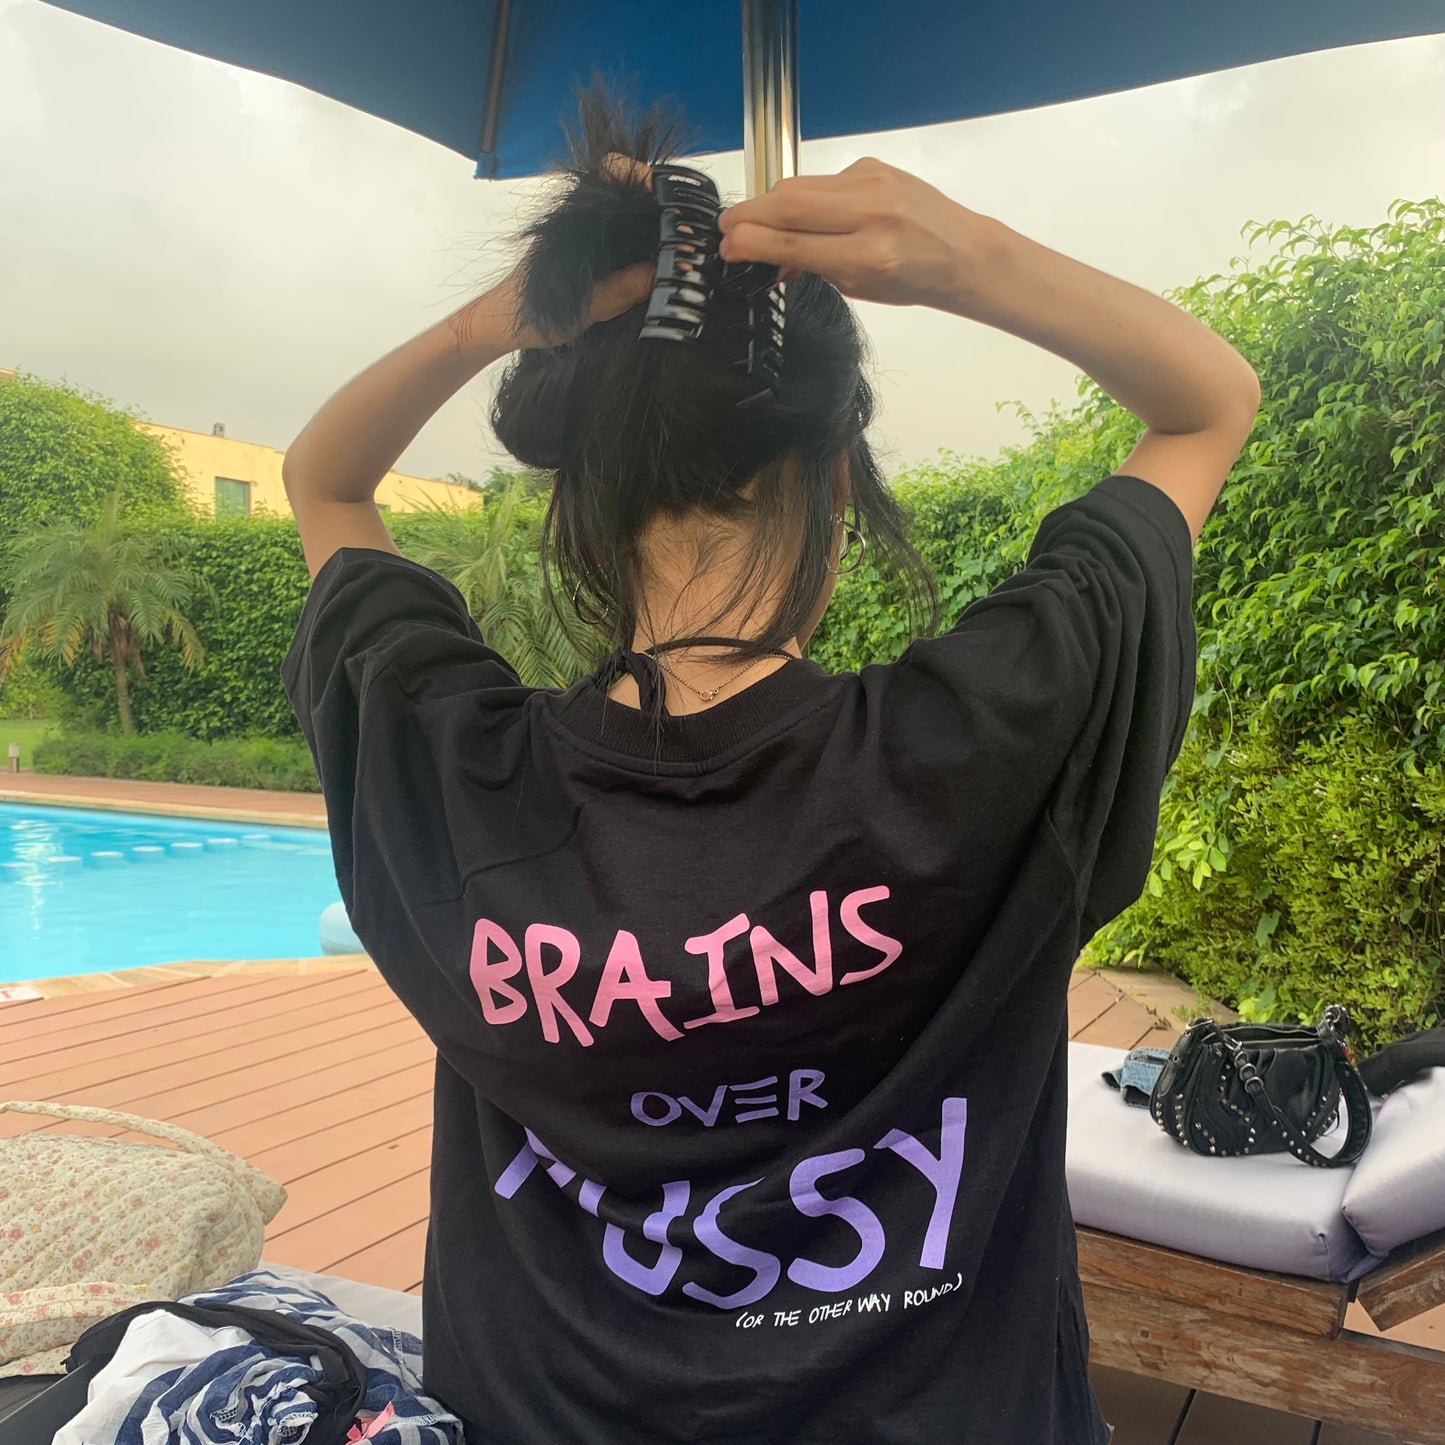 "Brains over Pussy"(Unisex) Oversized T